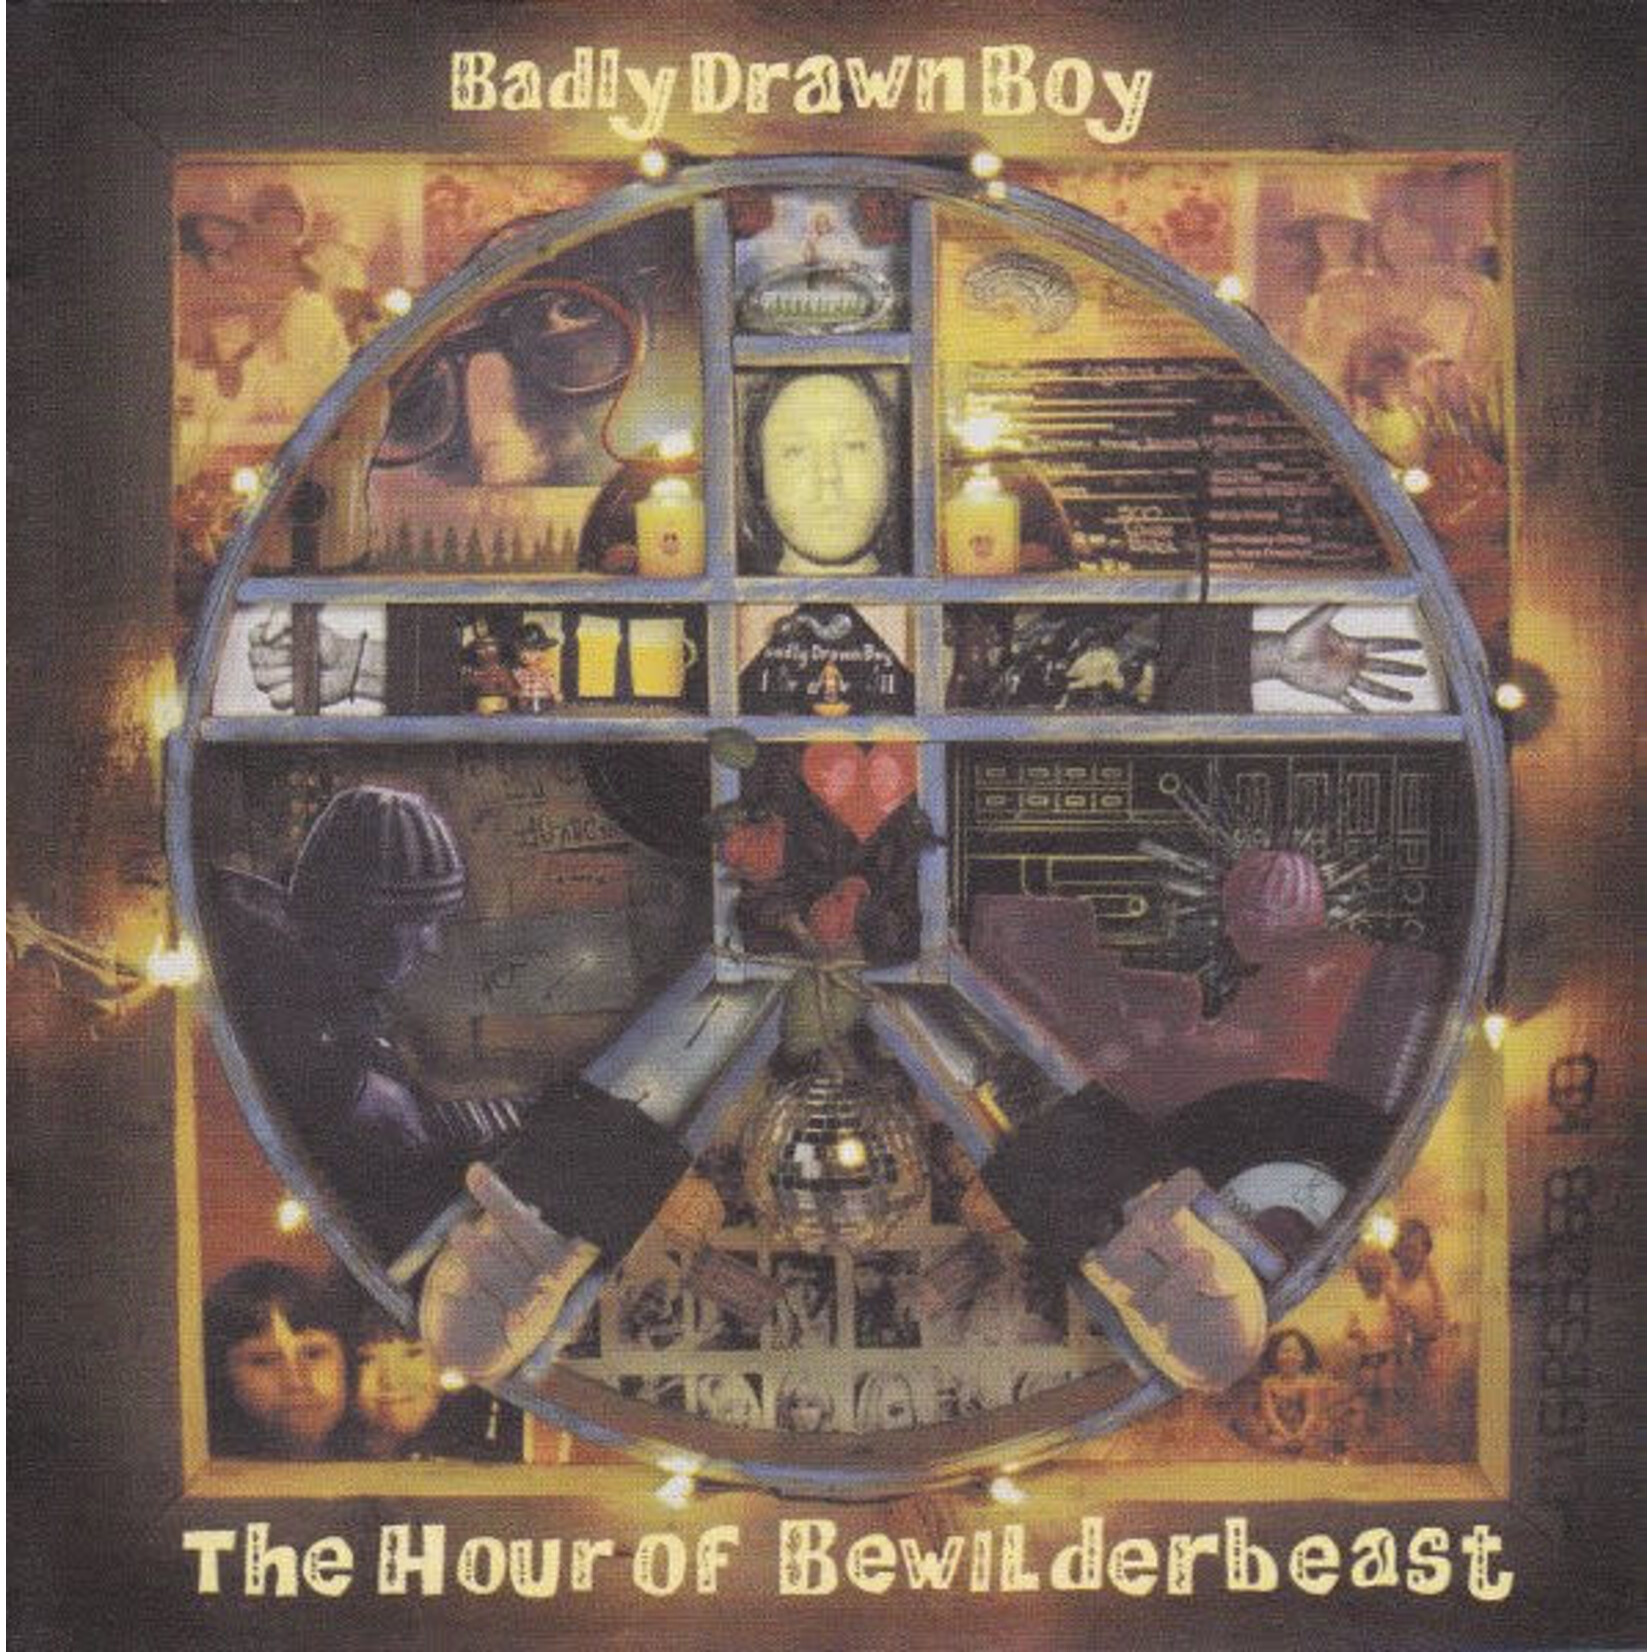 [New] Badly Drawn Boy - The Hour of Bewilderbeast (2LP)